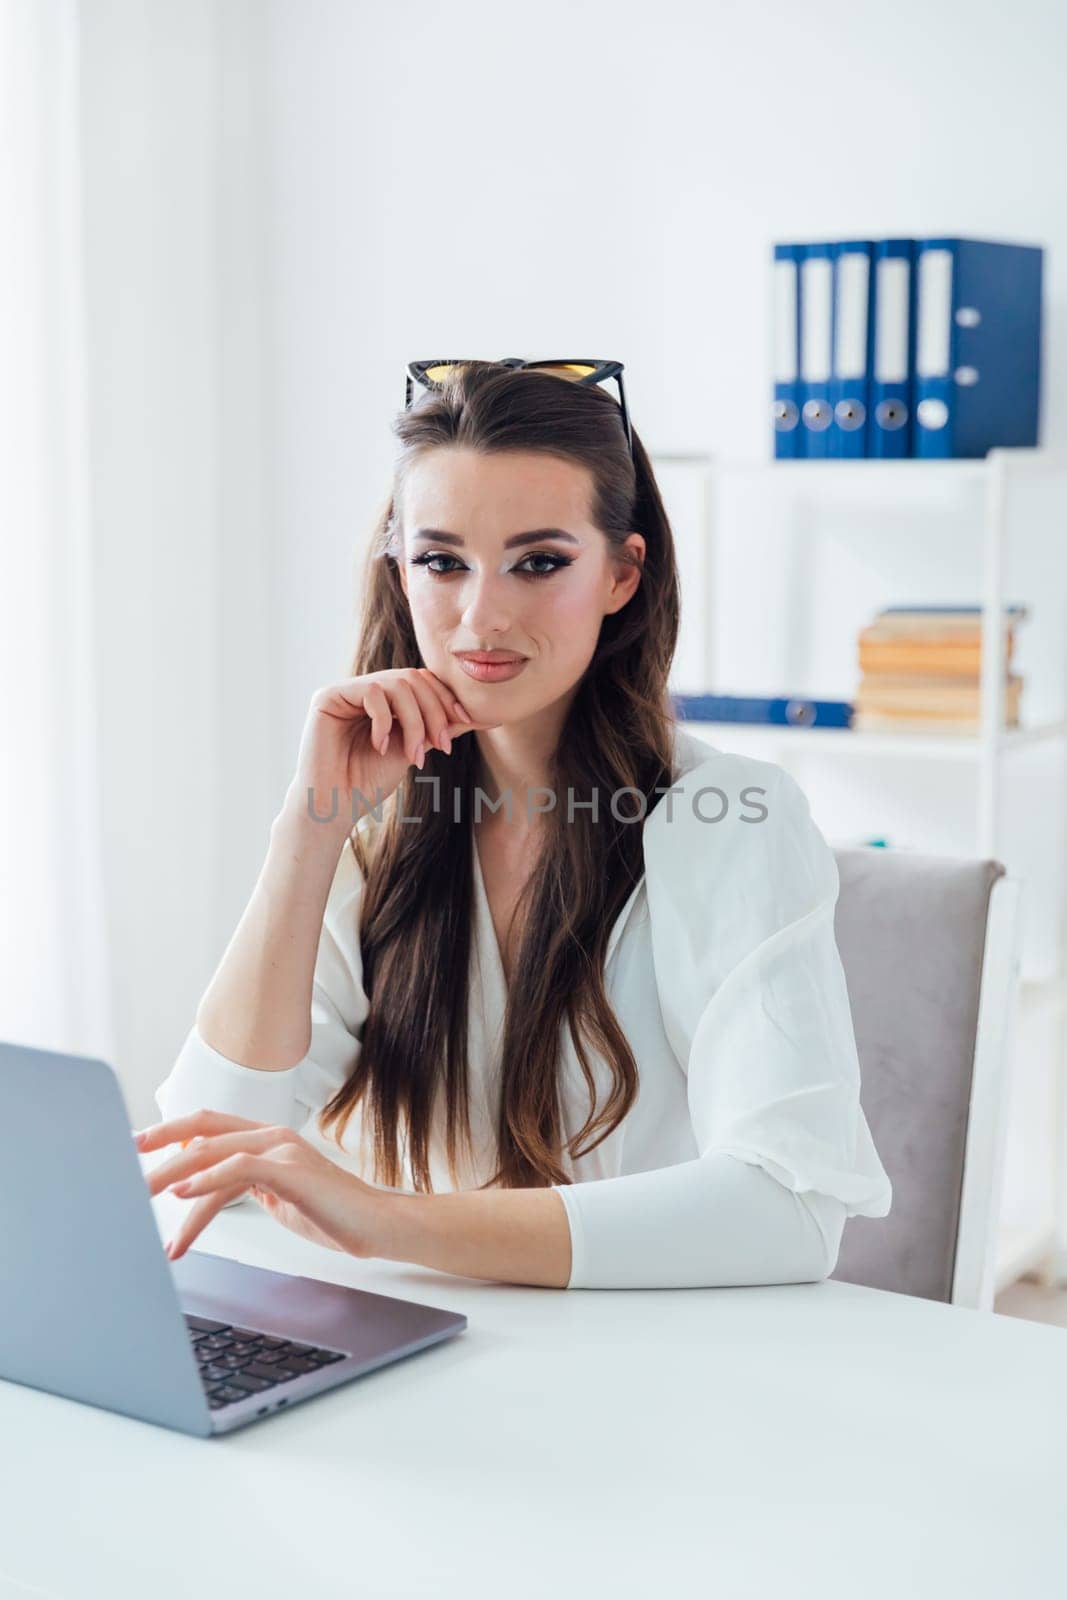 Businesswoman working on laptop in office finance business online by Simakov